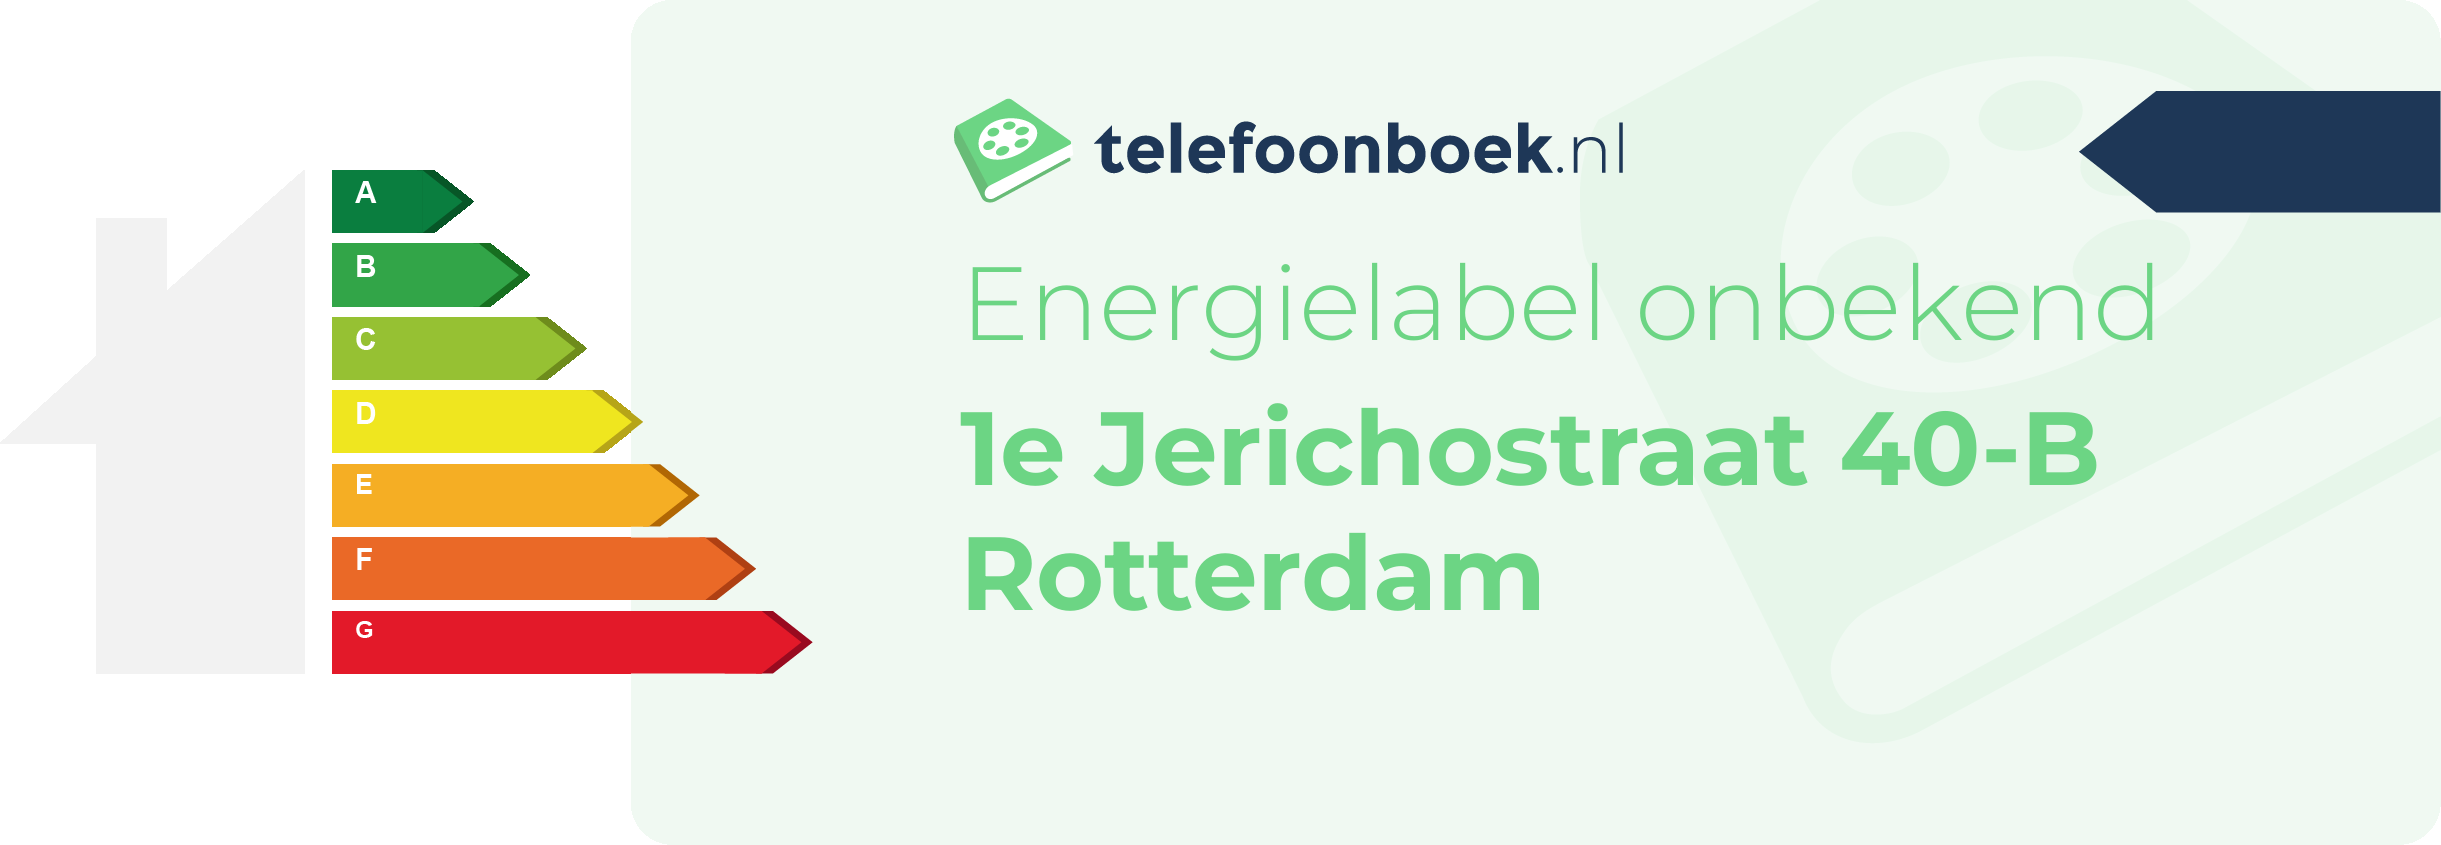 Energielabel 1e Jerichostraat 40-B Rotterdam